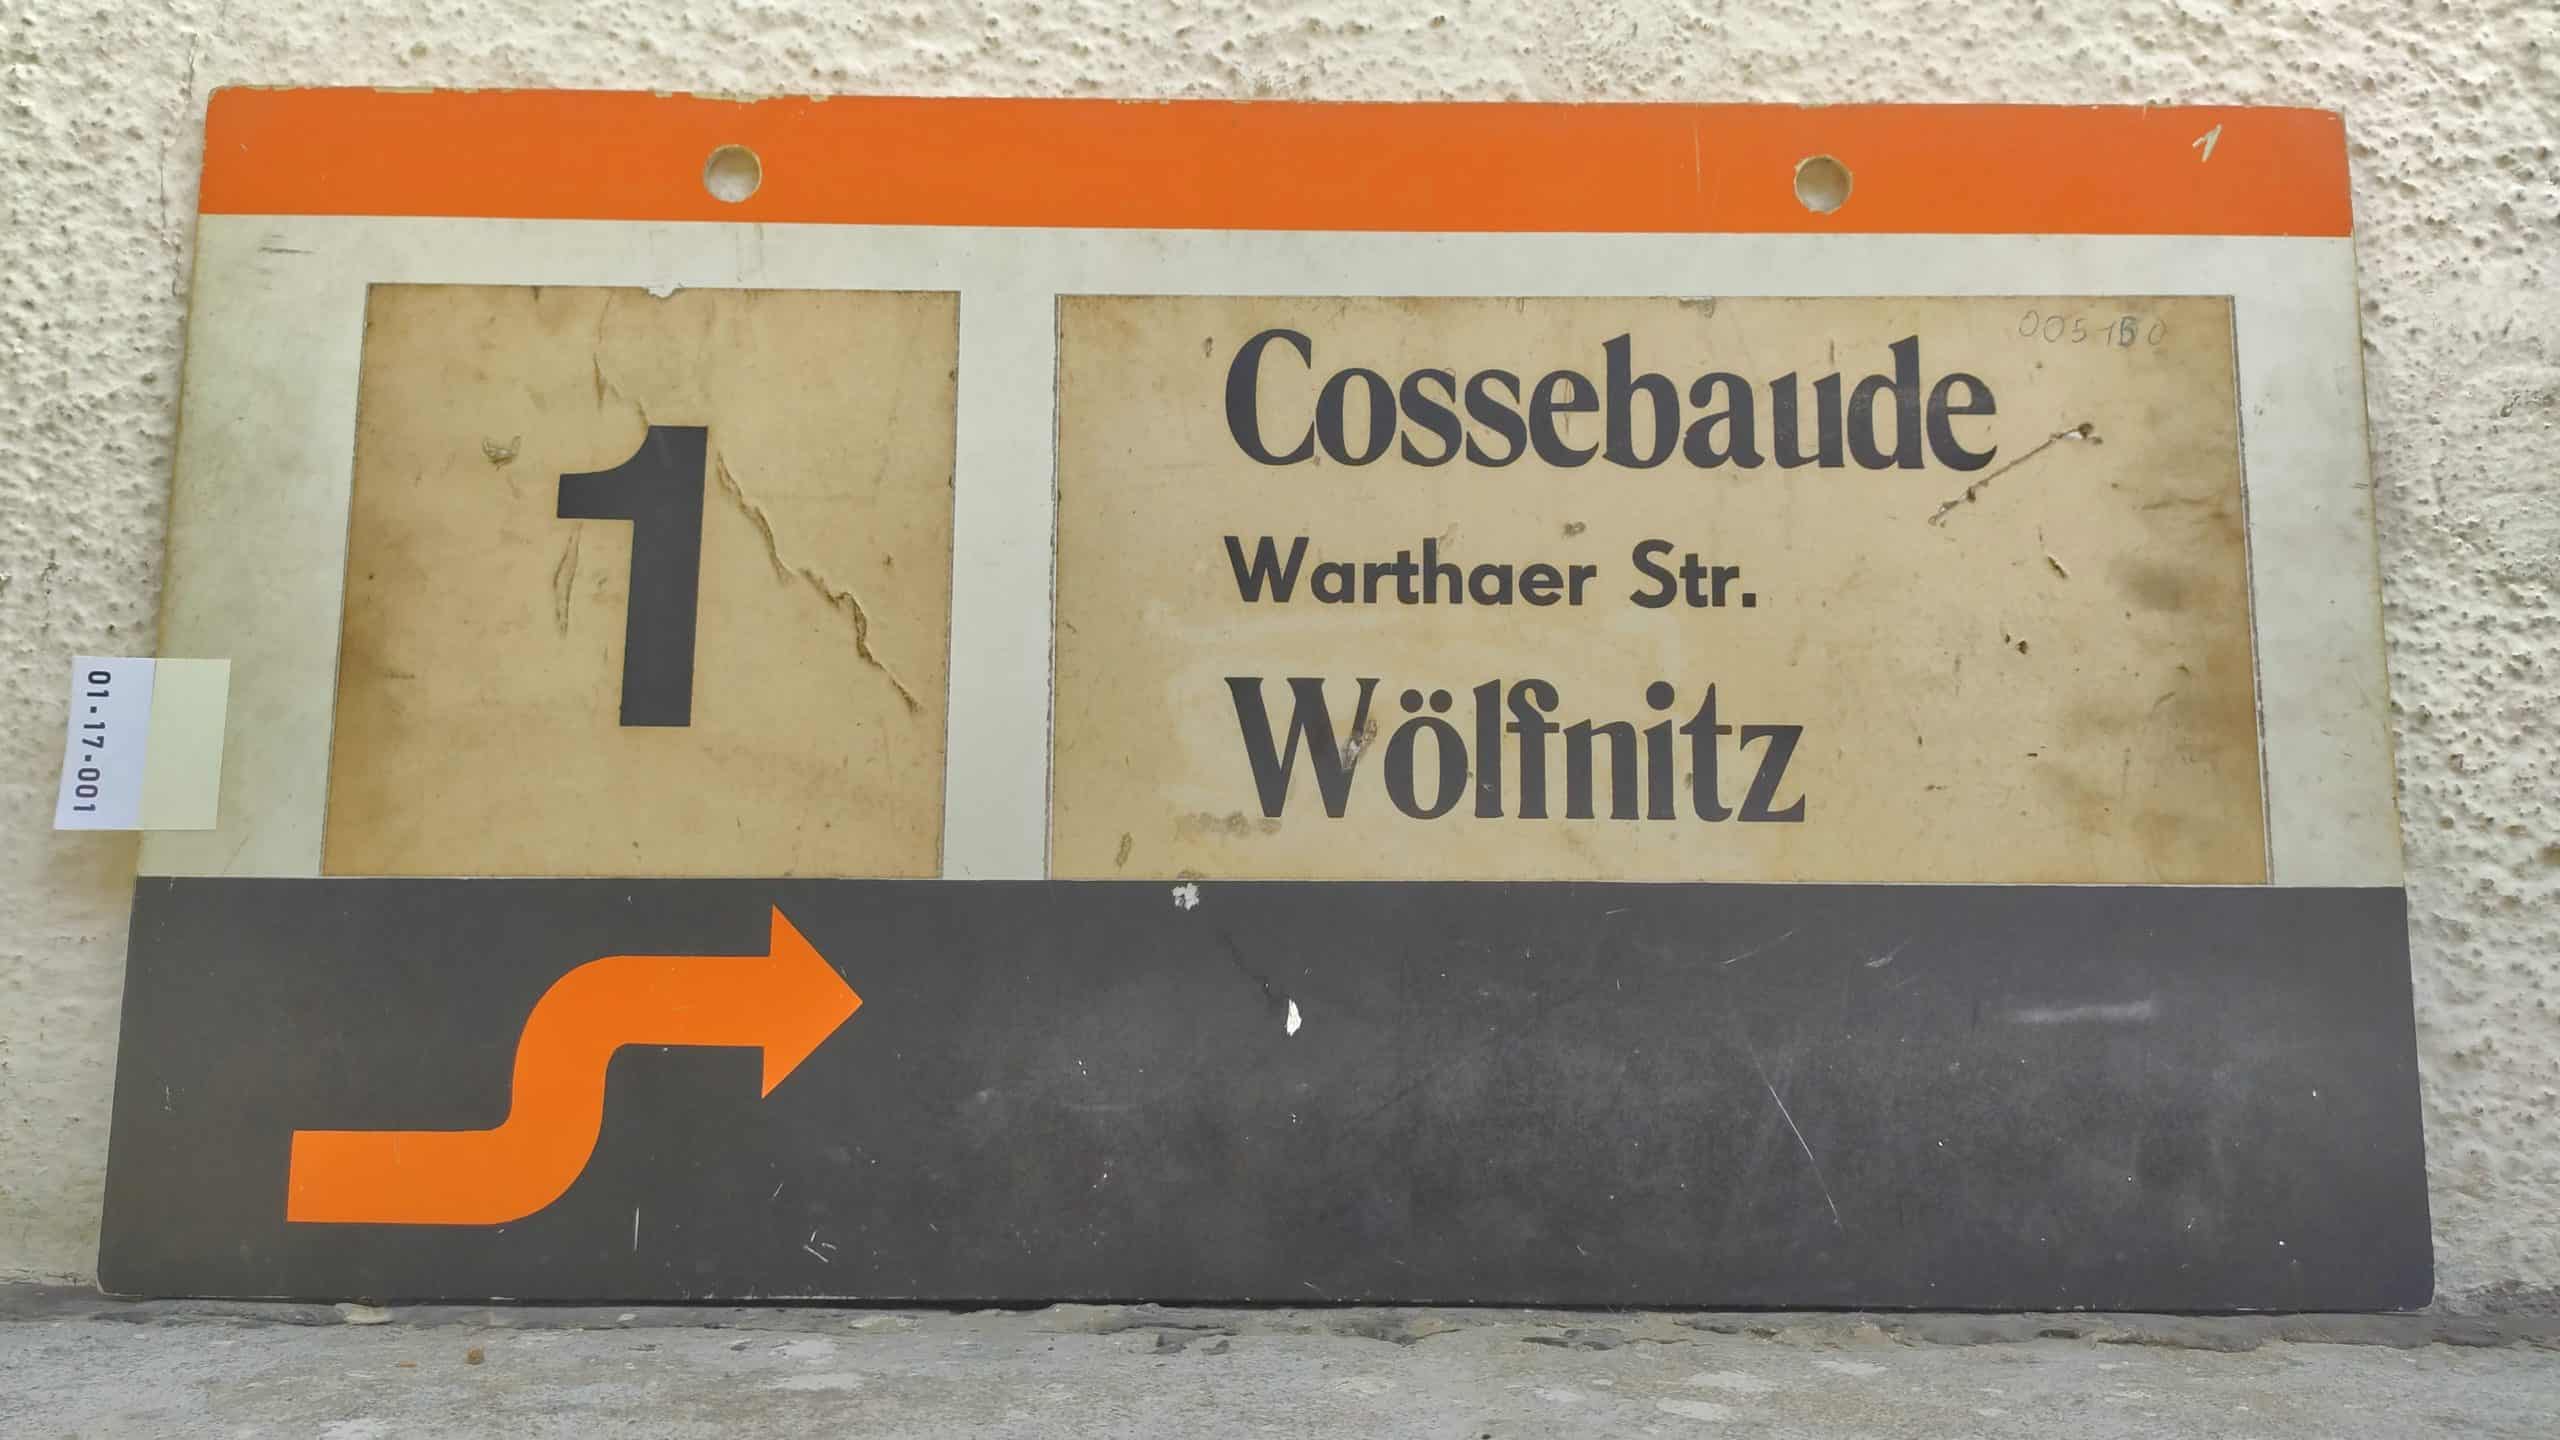 1 Cossebaude – Wölfnitz #1